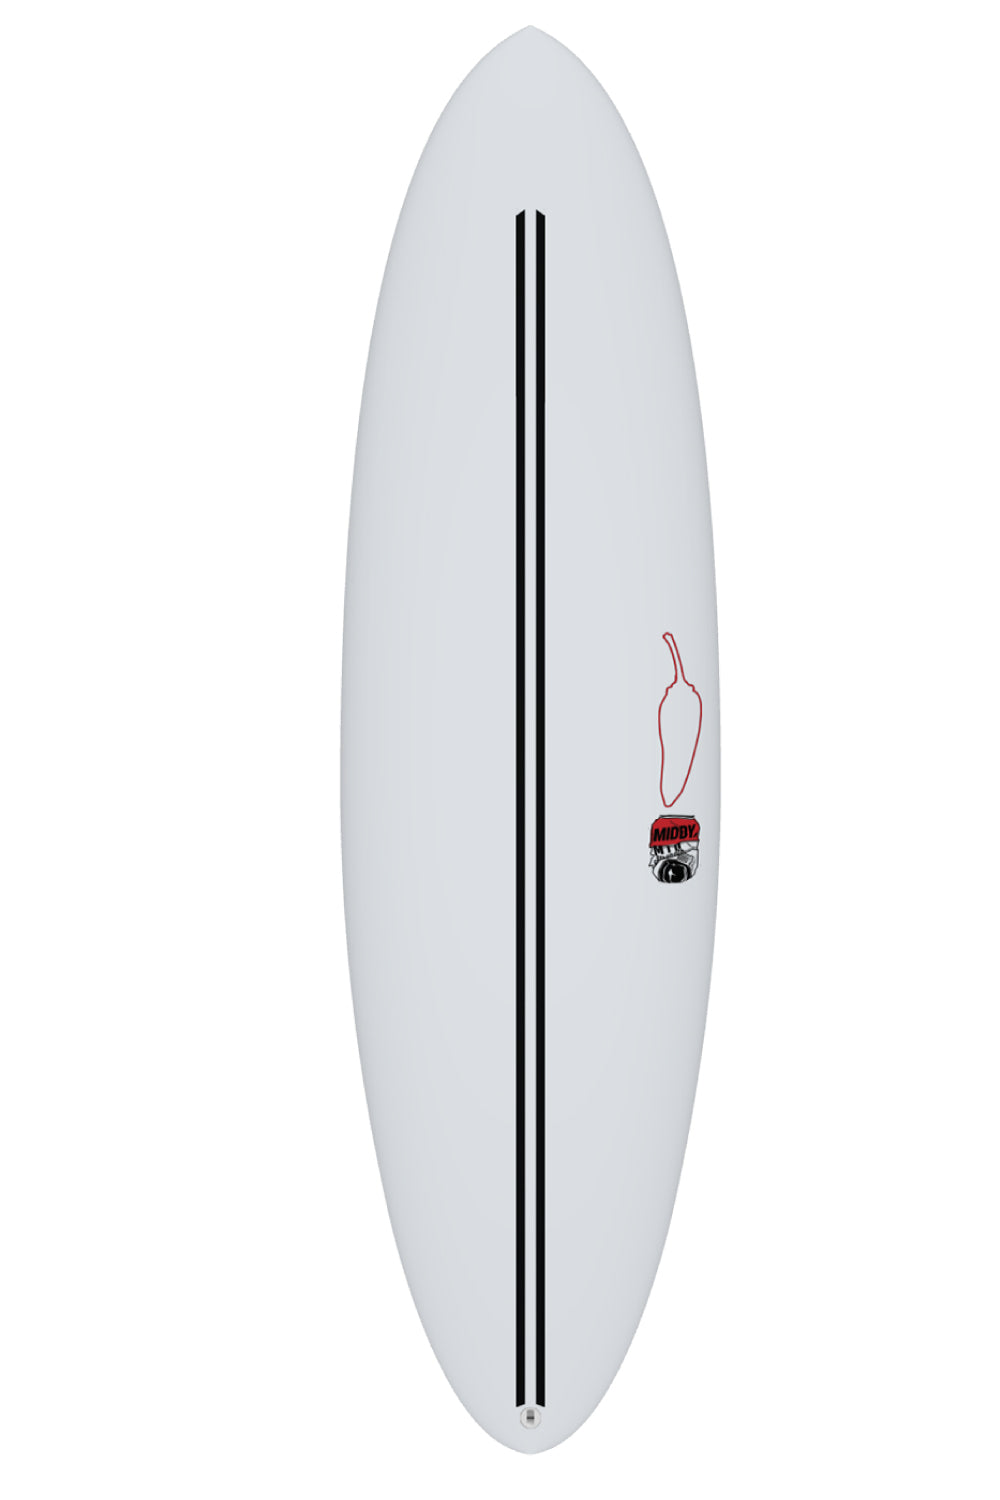 Chilli Middy Twin Tech EPS Surfboard